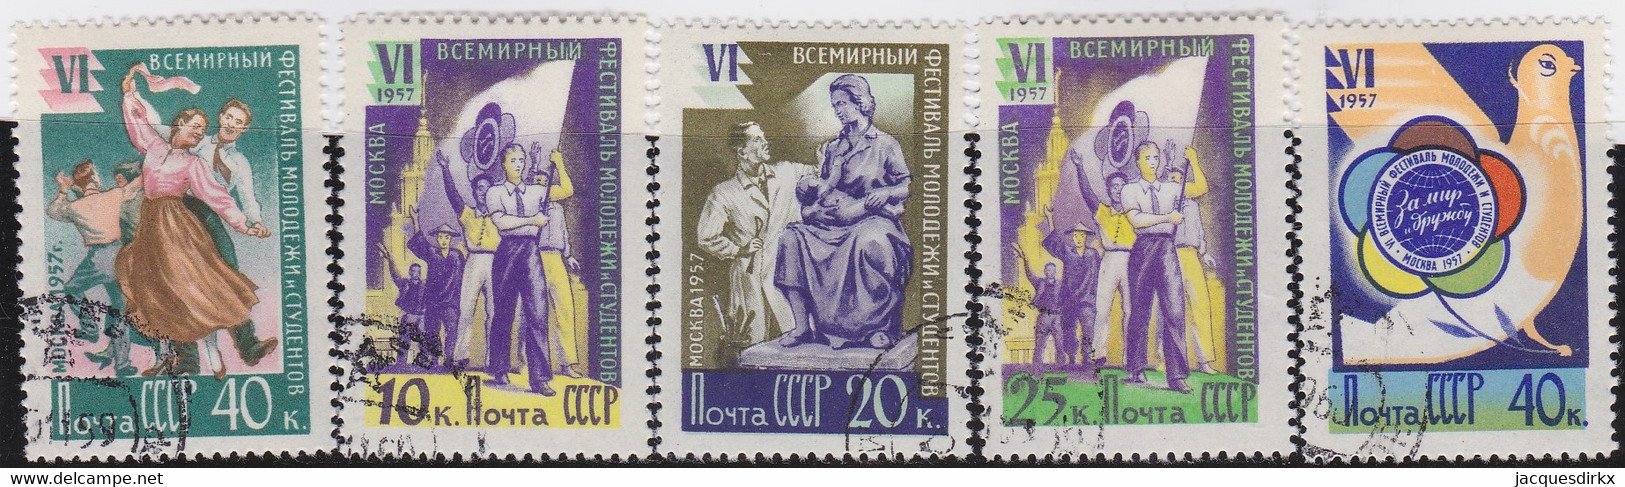 Russland     ,   Yvert    .     5  Marken     .     O    .        Gebraucht  .    /   .    Cancelled - Used Stamps